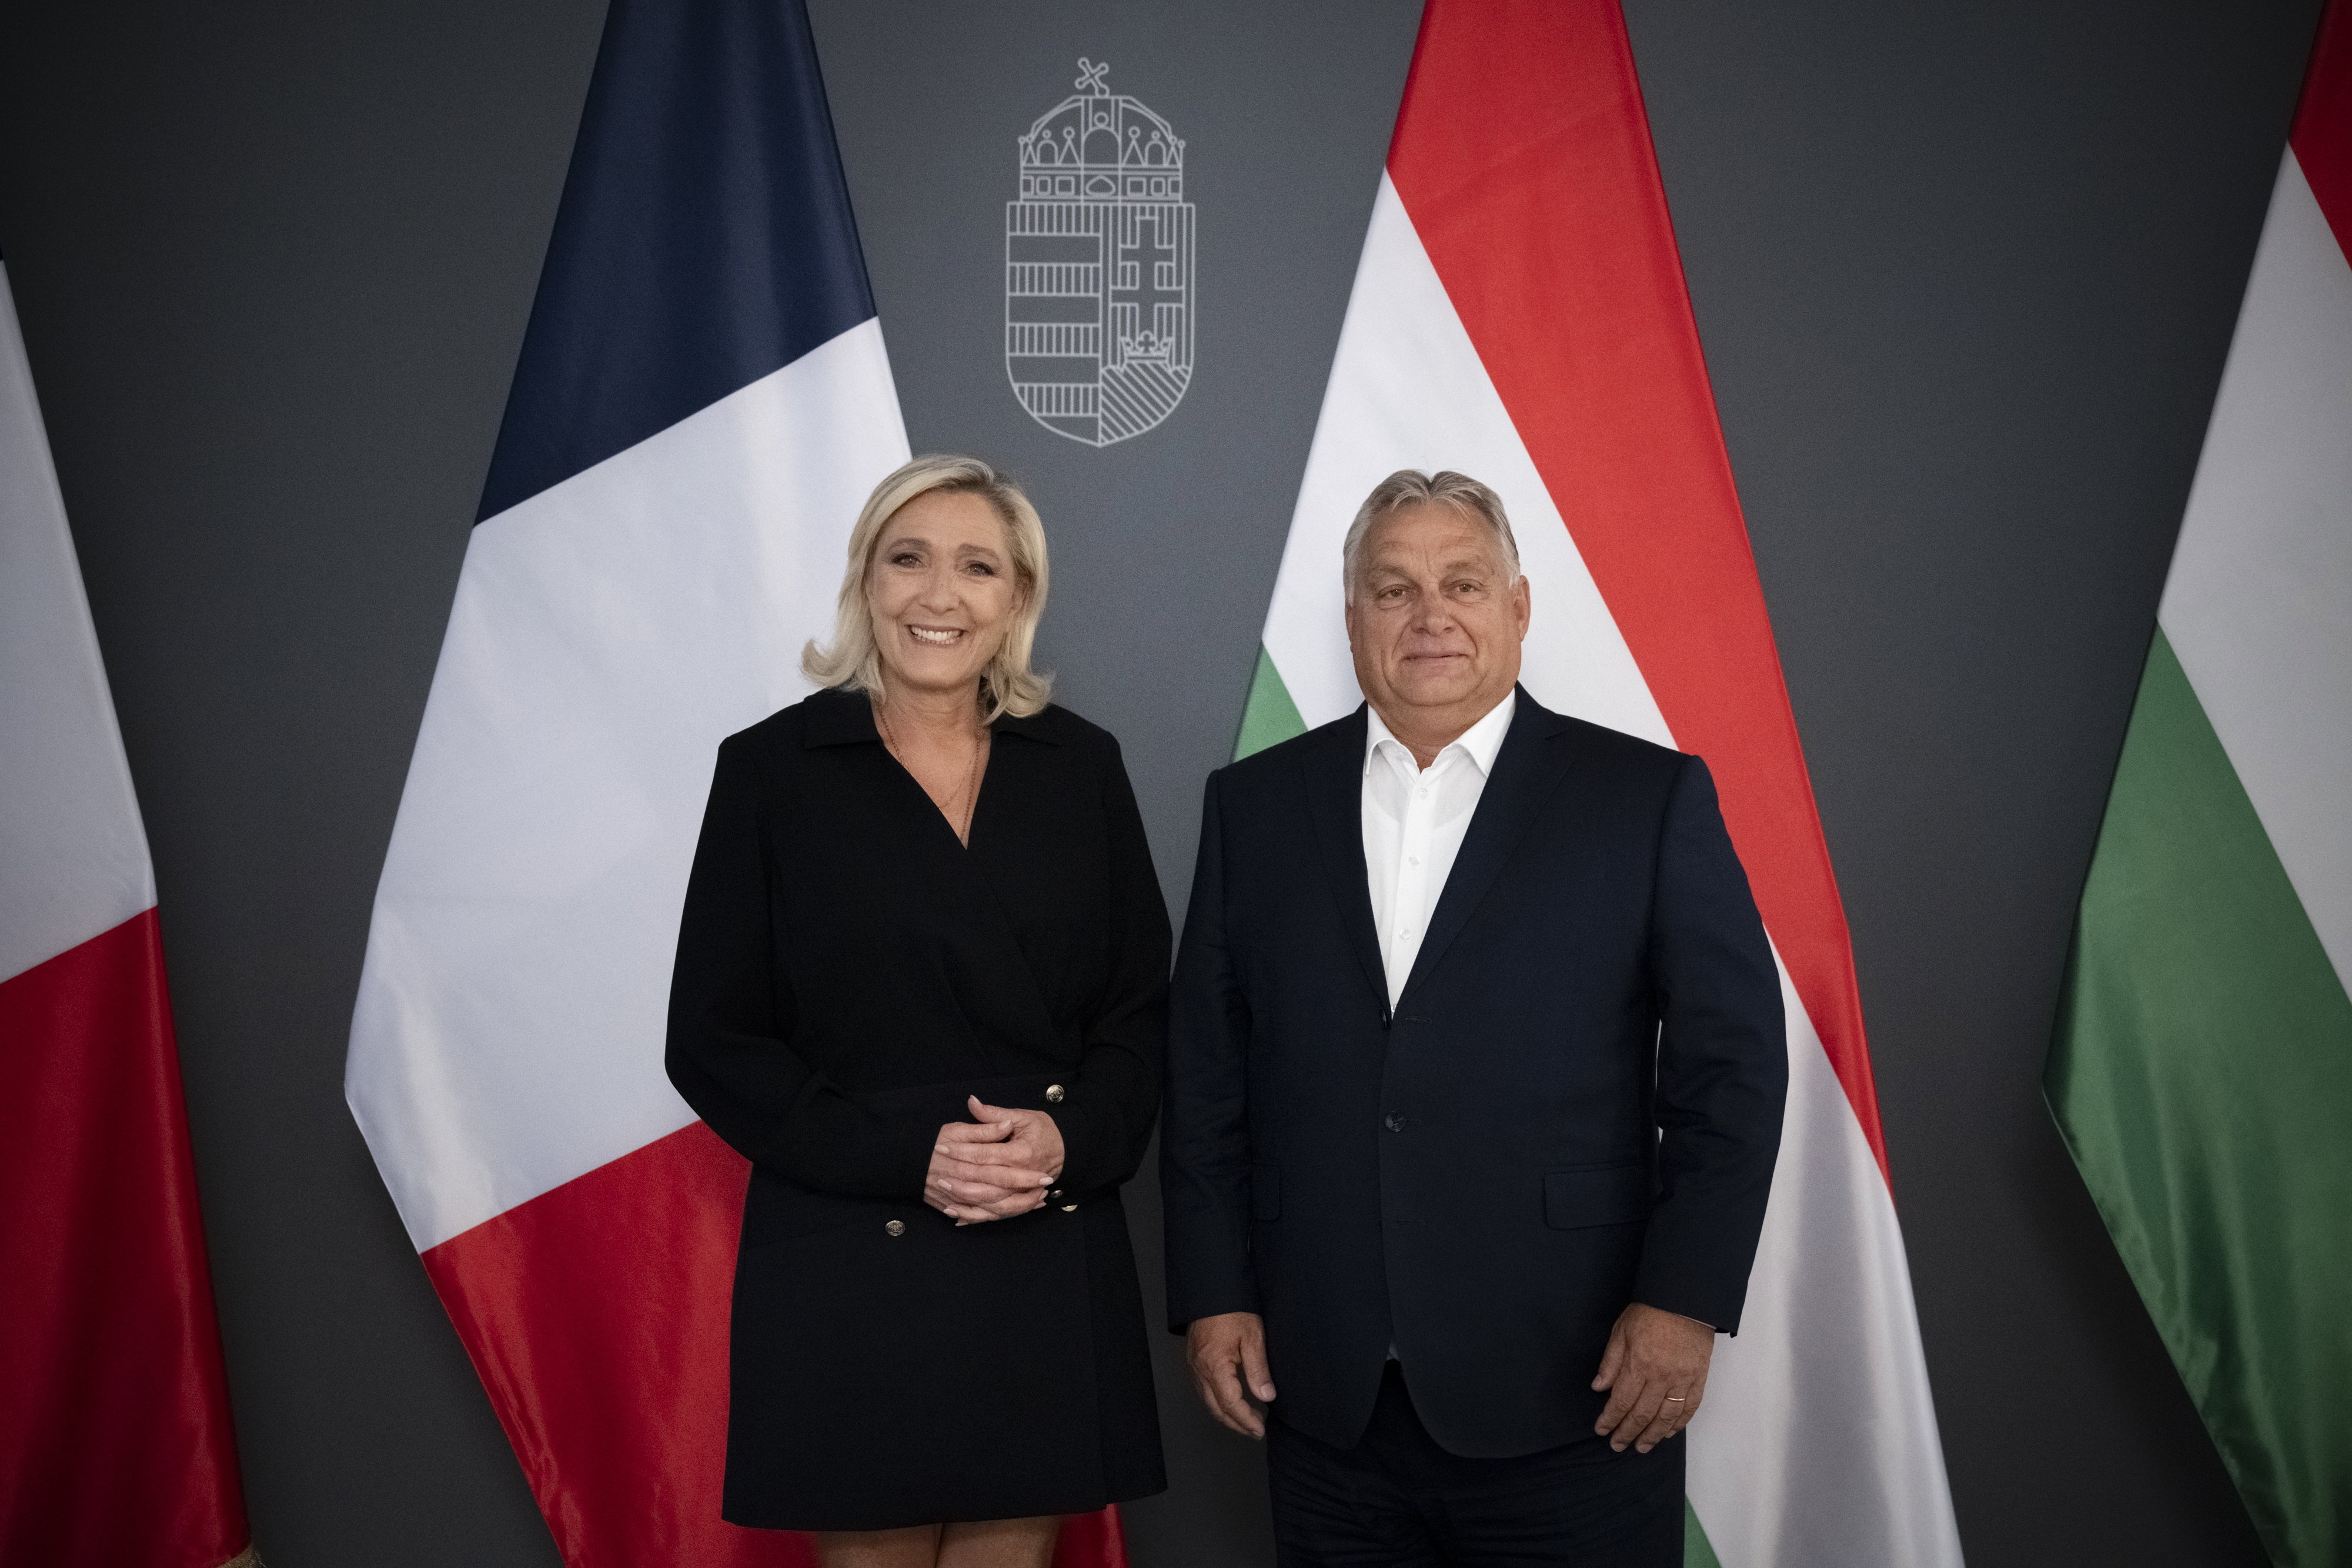 Viktor Orbán Meets Marine Le Pen